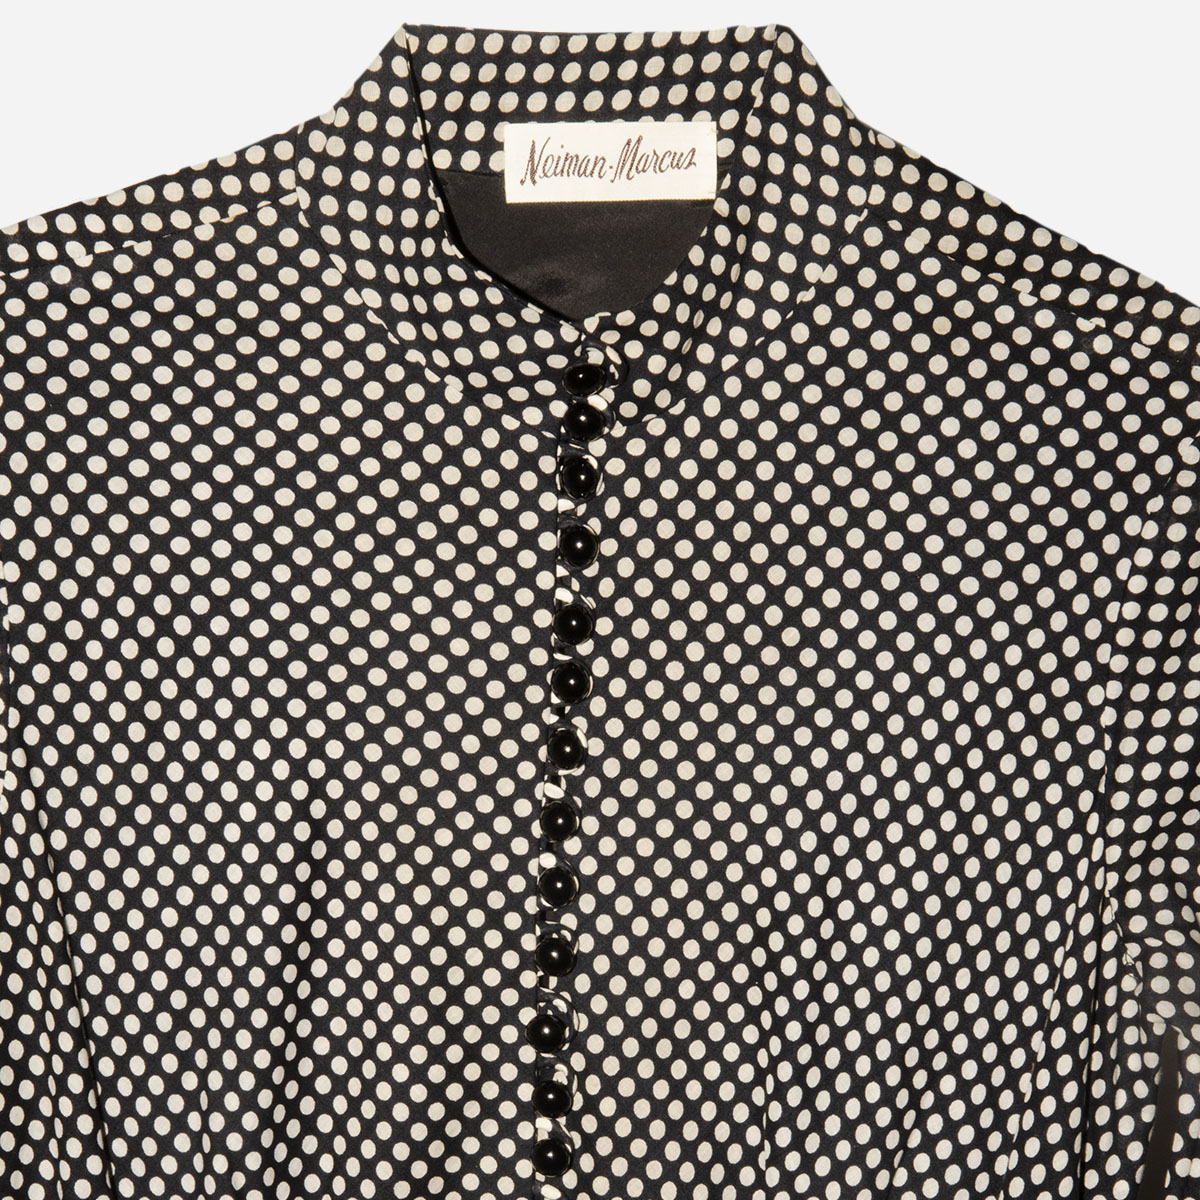 1950s Neiman Marcus label dress